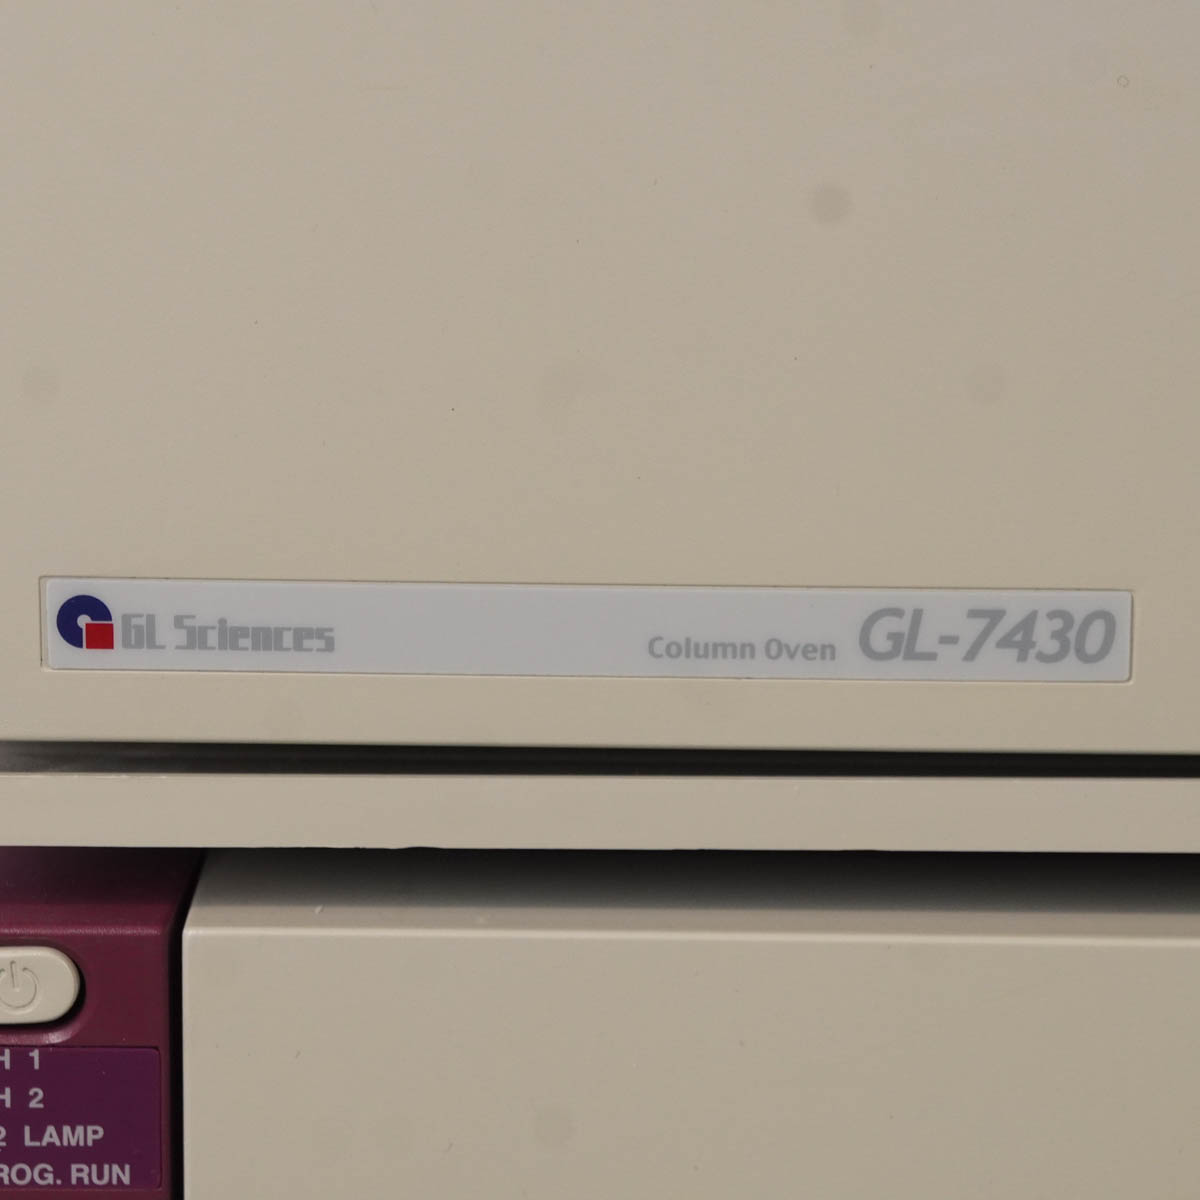 DW]USED 8日保証 セット GL Sciences GL-7420 GL-7430 GL-7450 HPLC 液クロ GL-7400  Liquid Chromatograph Auto Sampler...[ST04013-0097] 分析機器,液体クロマトグラフ  中古販売分析機器計測器総合商社ディルウィングス